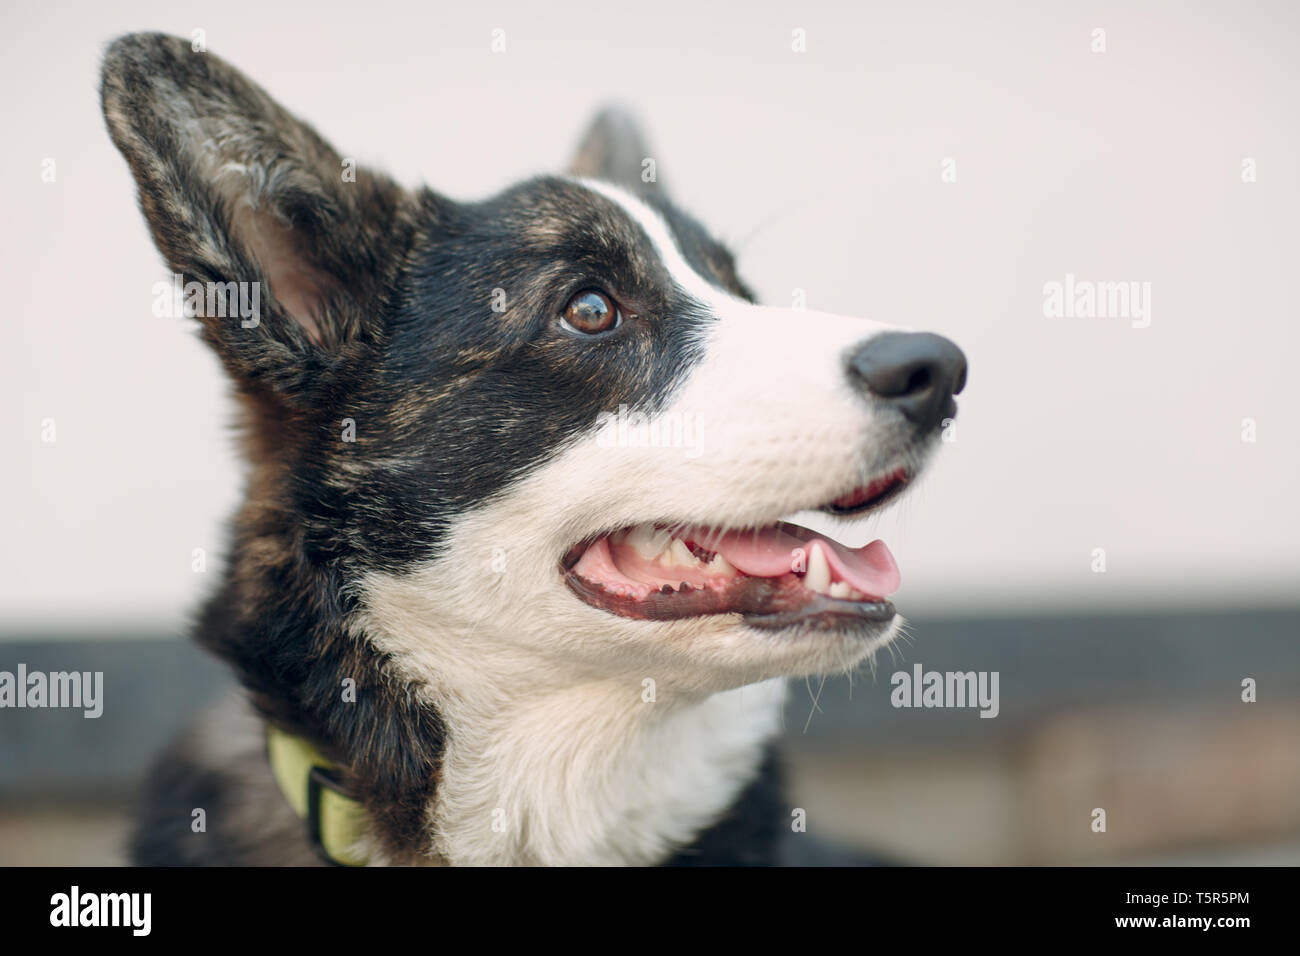 Corgi welsh cardigan puppy dog Stock Photo